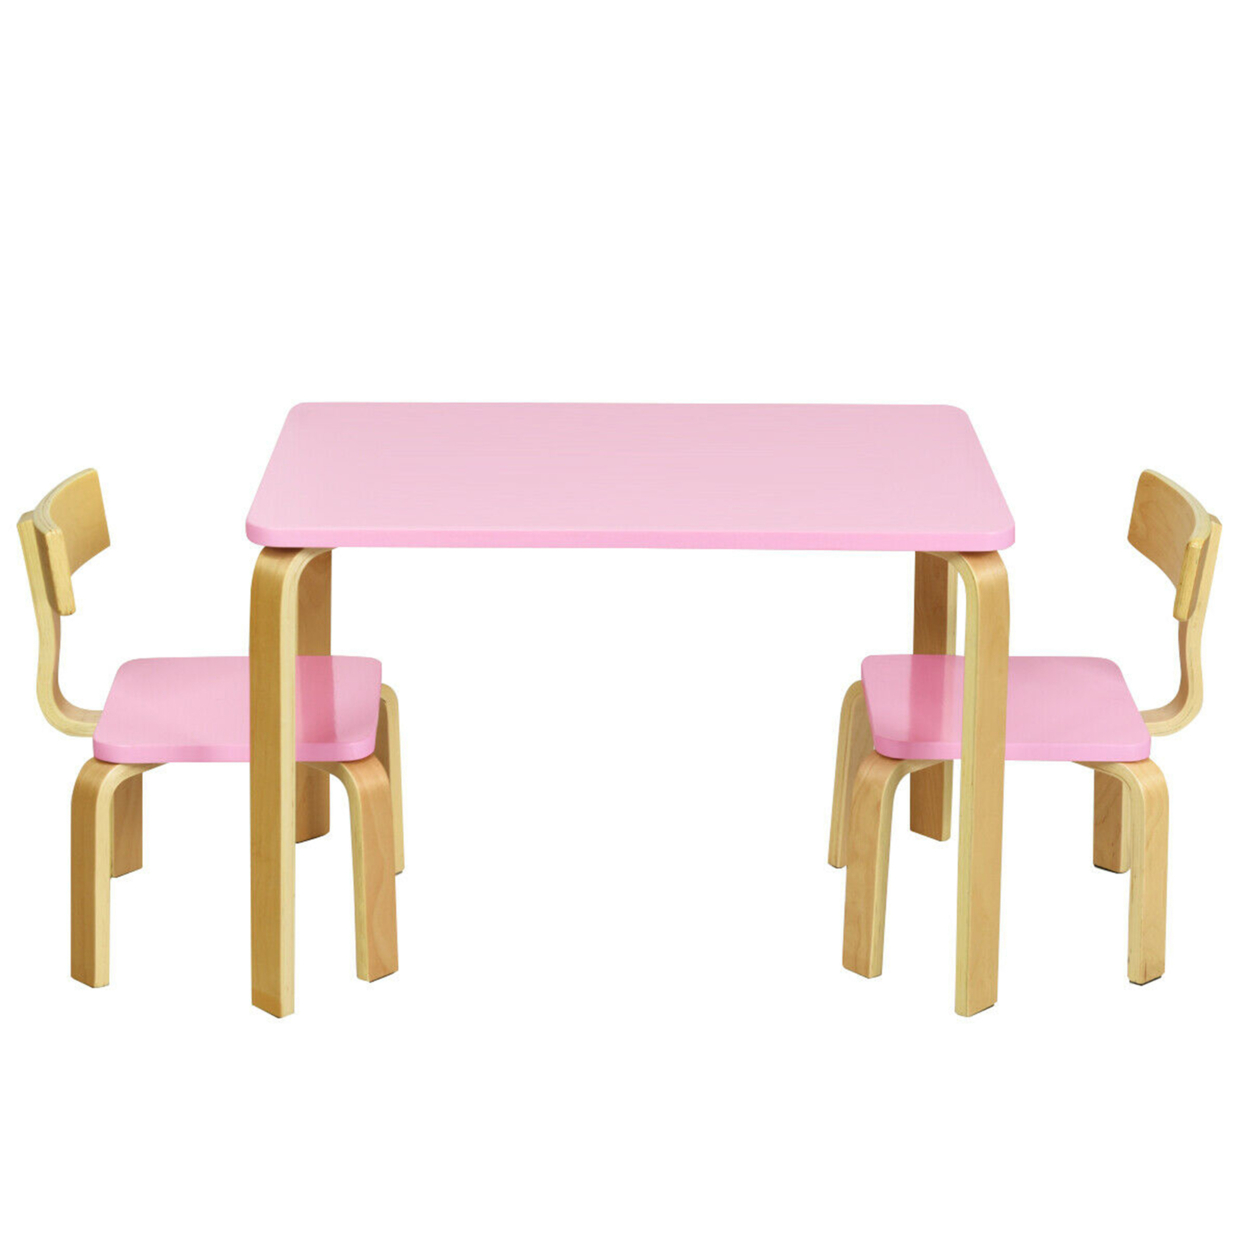 3 Piece Kids Wooden Table And 2 Chairs Set Children Activity Art Desk Furniture